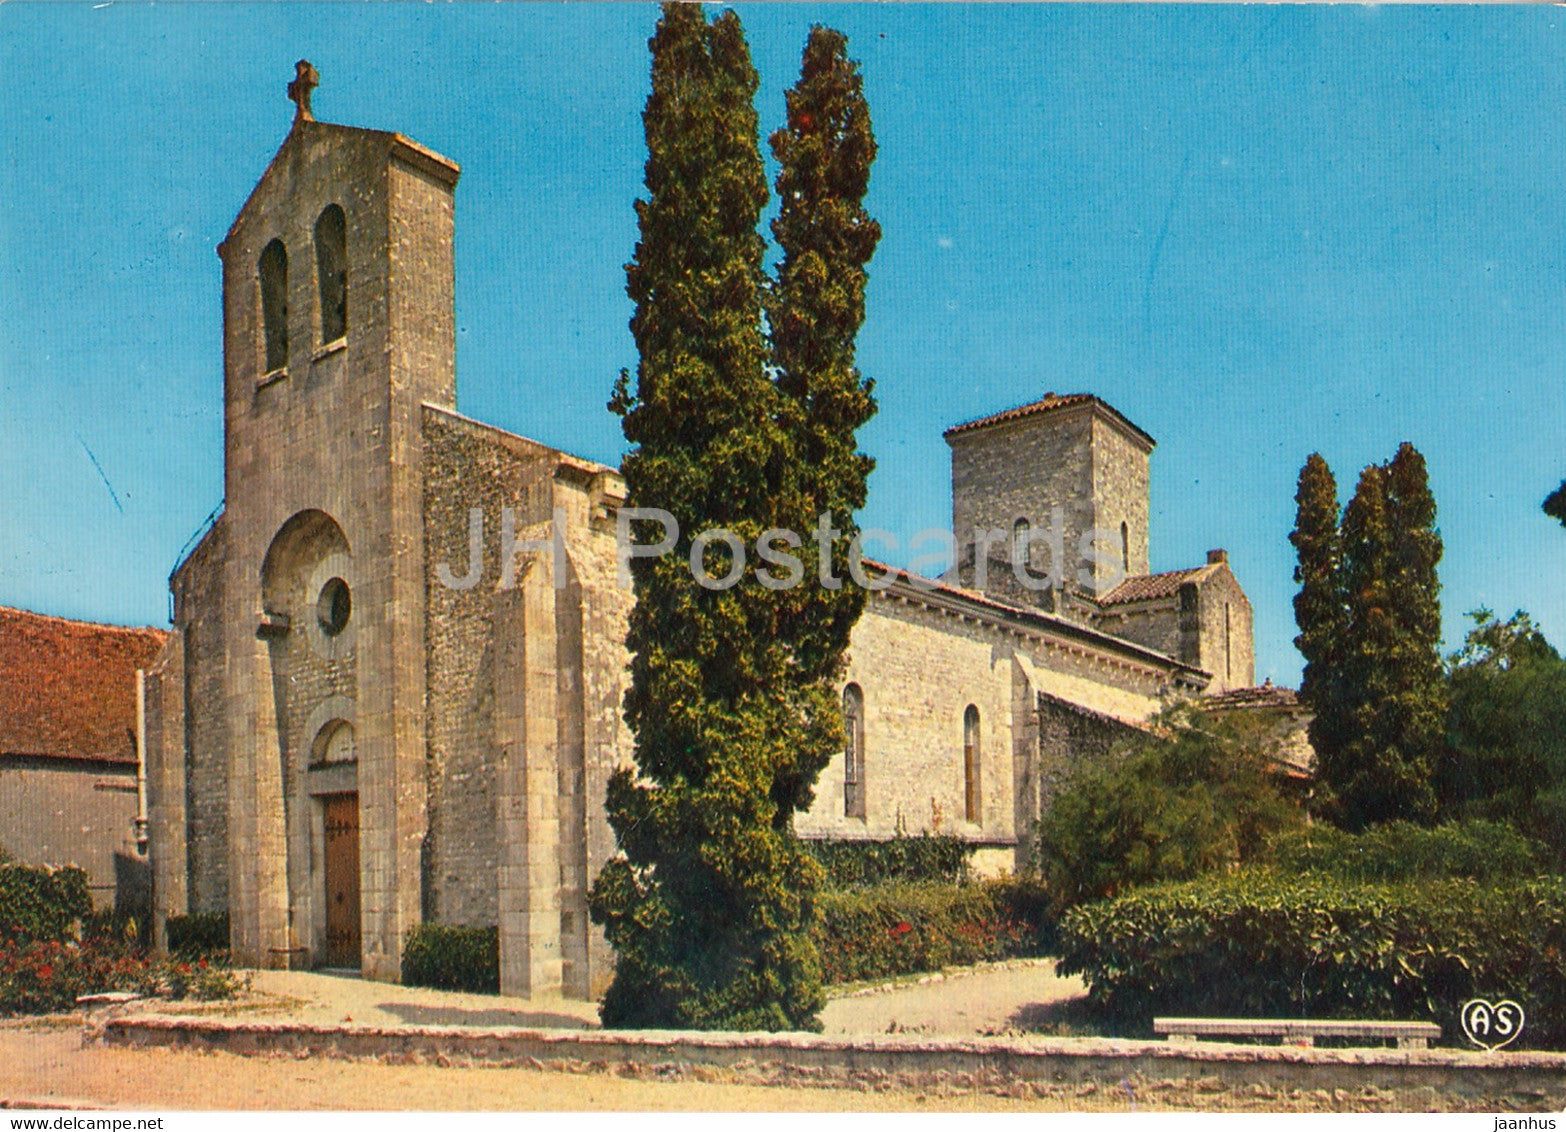 Germigny Des Pres - L'eglise d'epoque carolingienne - church - France - unused - JH Postcards